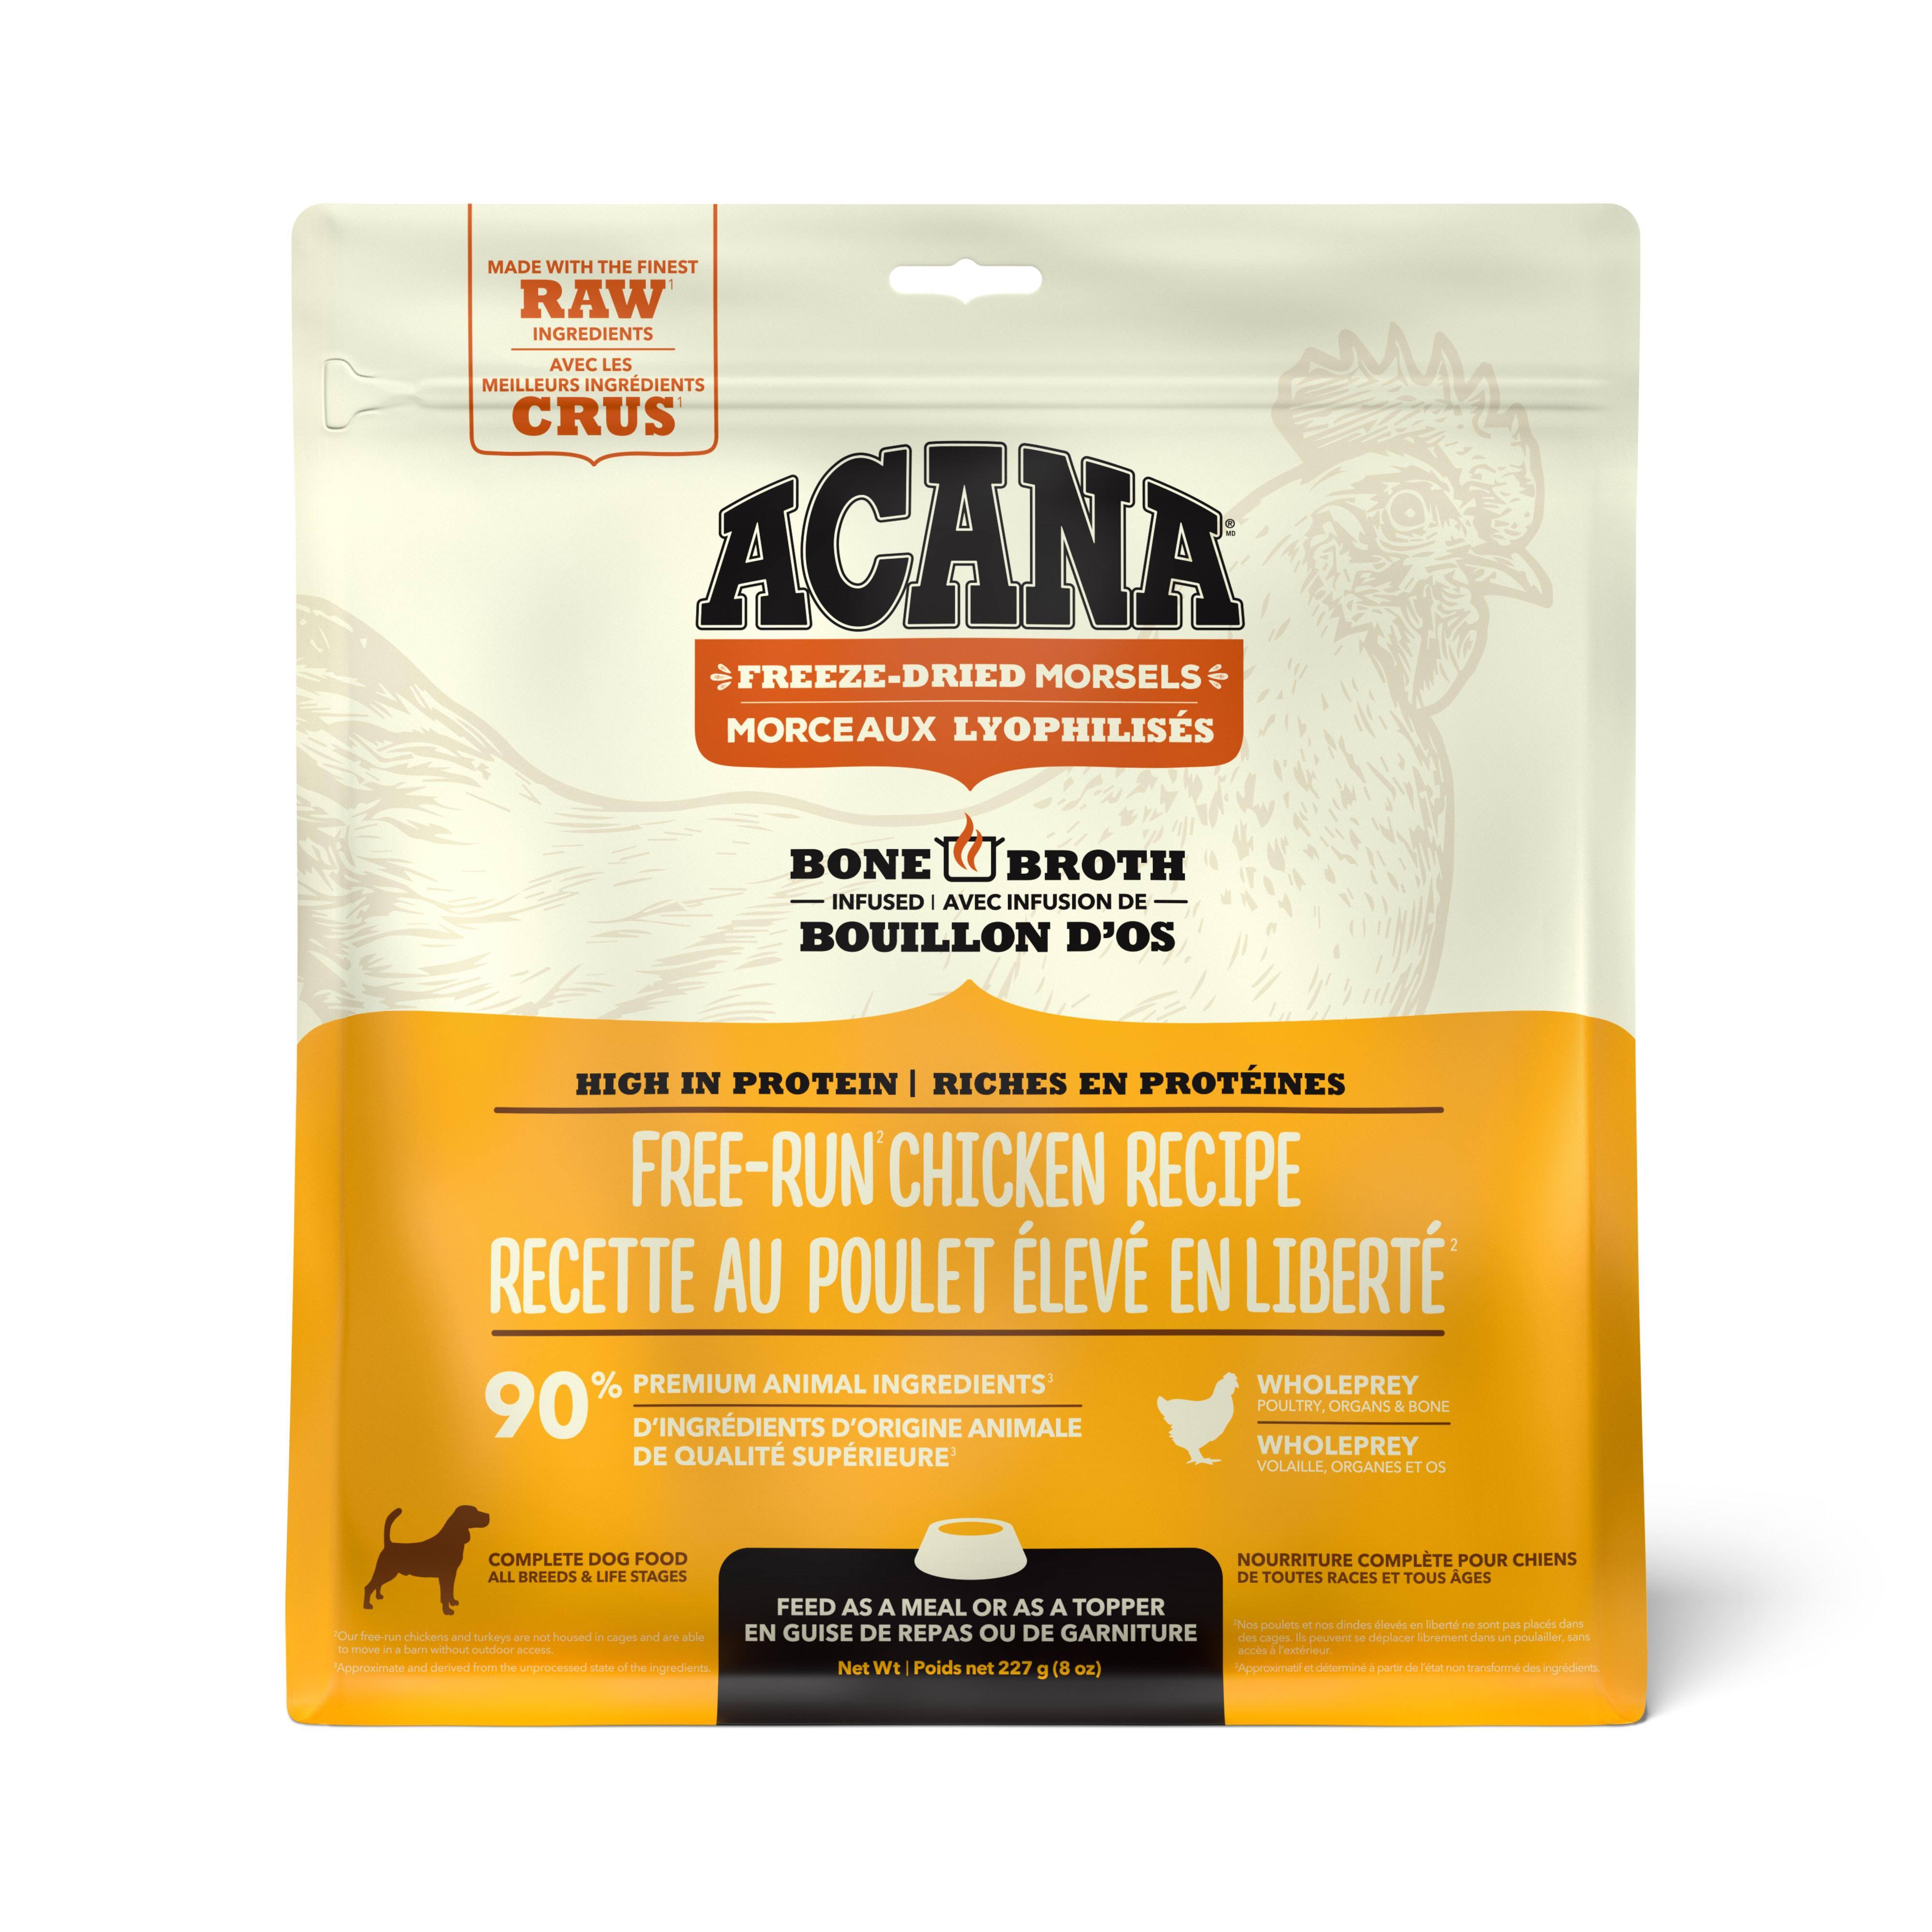 Acana Freeze-Dried Morsels Dog Food - Free-Run Chicken Recipe - 8 oz. Bag